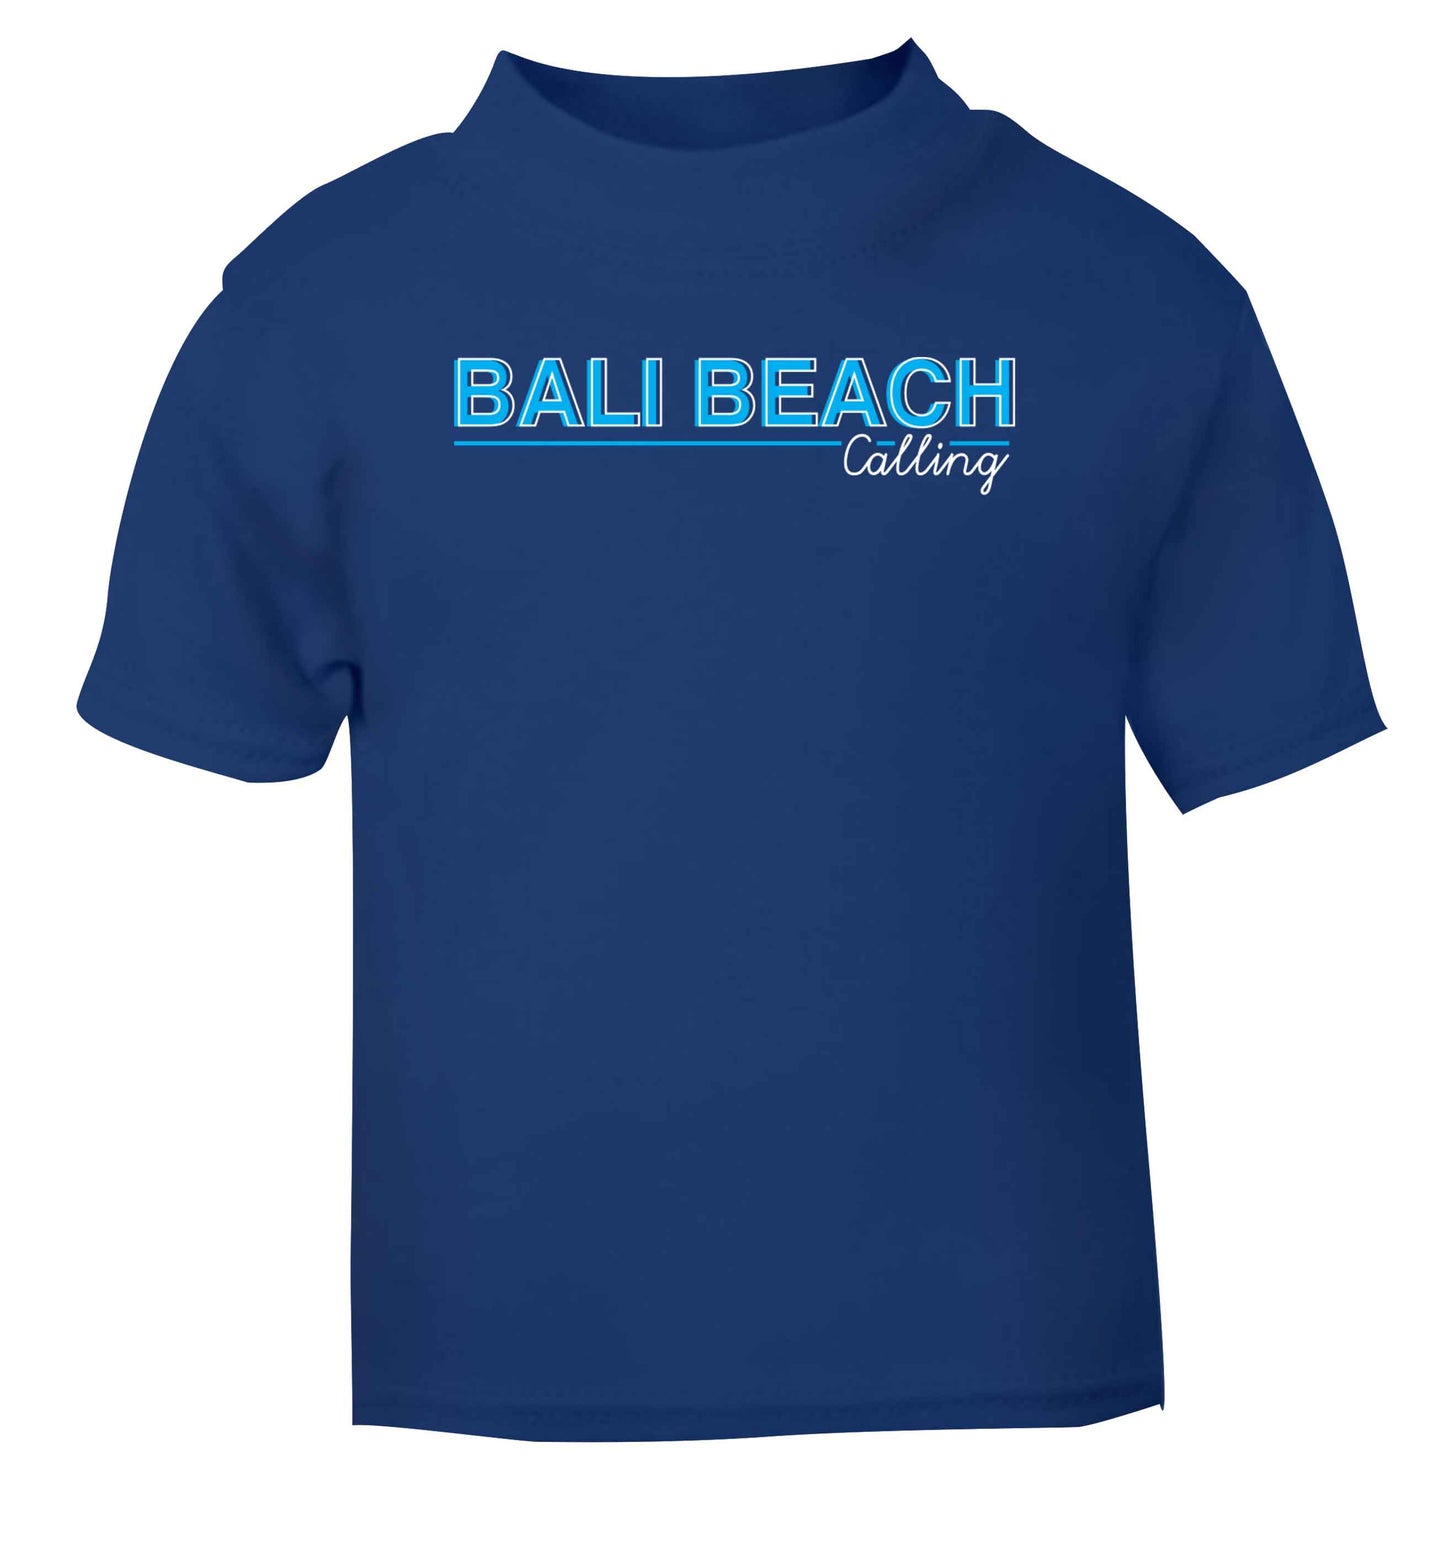 Bali beach calling blue Baby Toddler Tshirt 2 Years